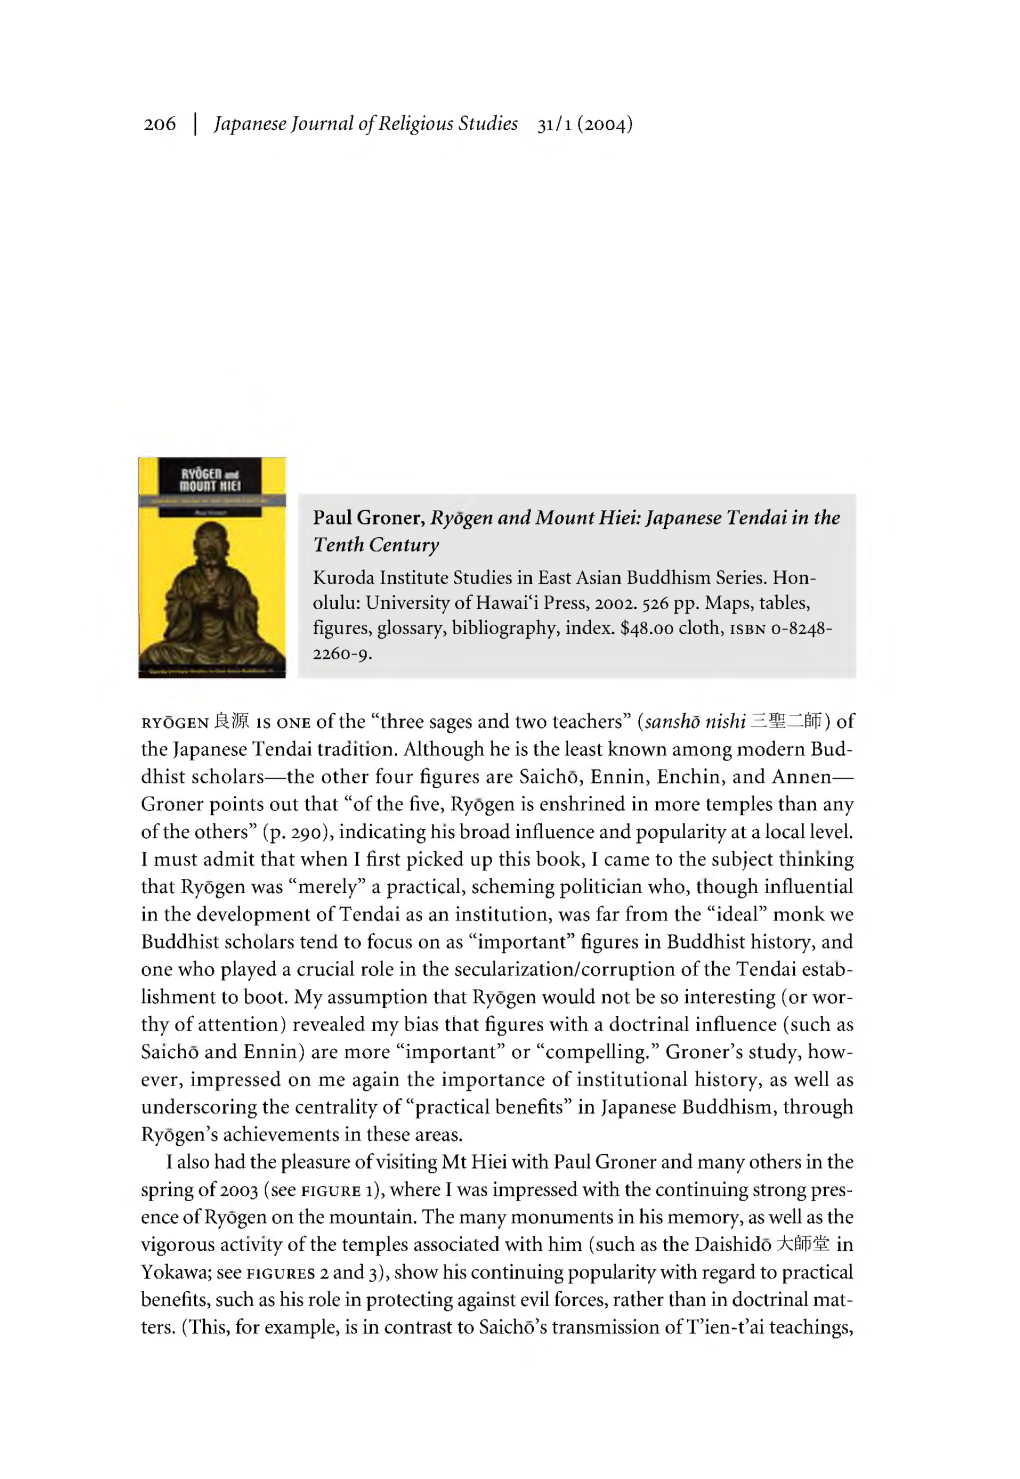 Paul Groner, Ryogen and Mount Hiei: Japanese Tendai in the Tenth Century Kuroda Institute Studies in East Asian Buddhism Series